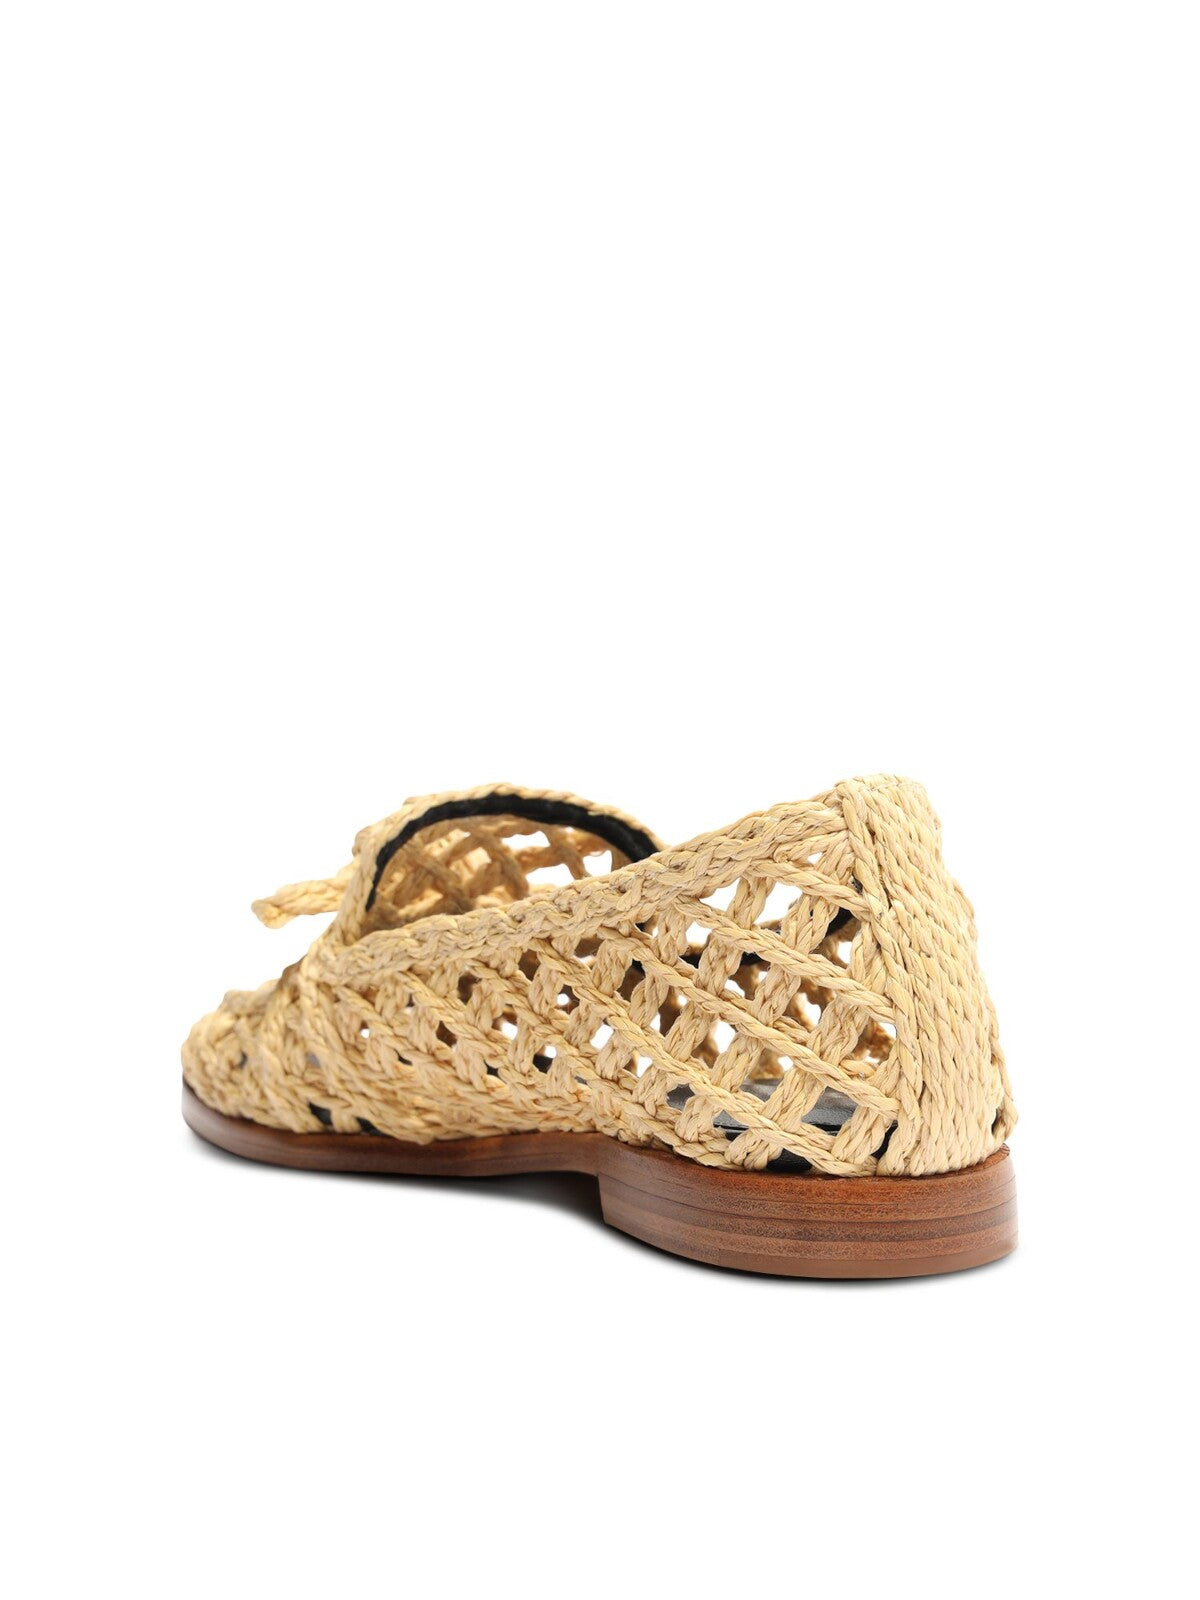 ALEXANDRE BIRMAN Womens Beige Rafia Knot Detail Woven Padded Clarita Square Toe Slip On Leather Loafers Shoes 35.5